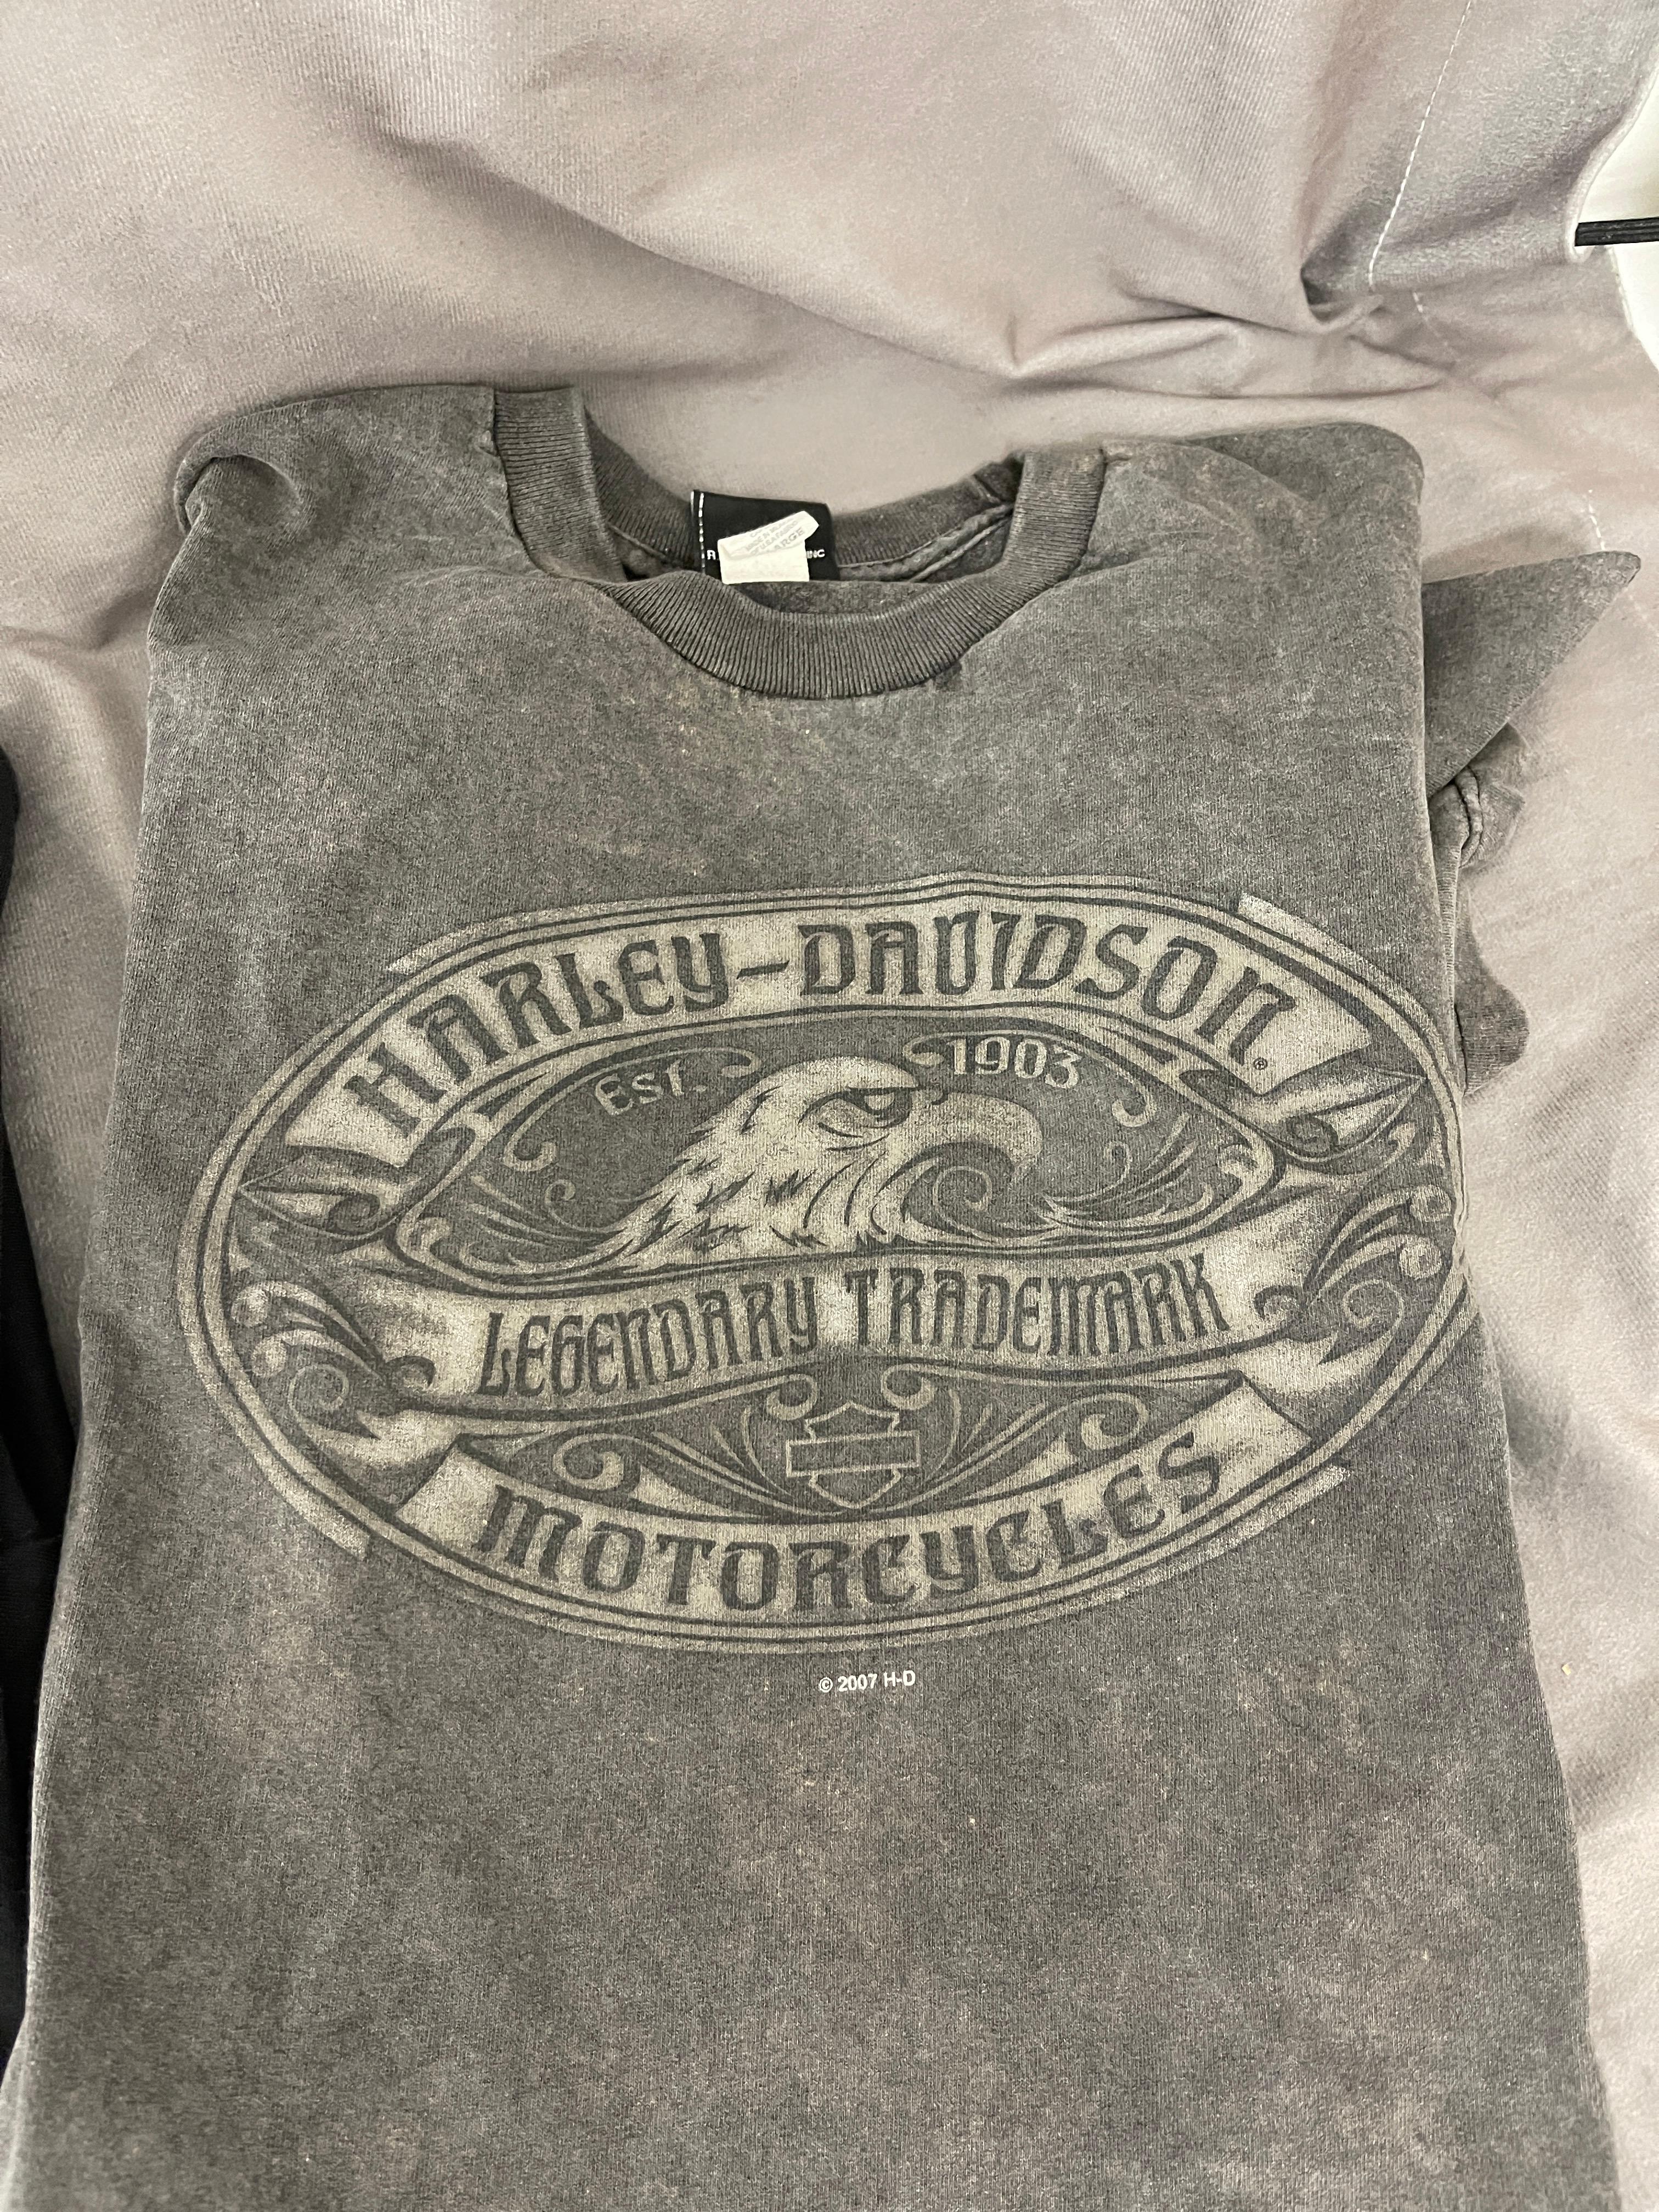 Harley Davidson T-shirts Collection Lot